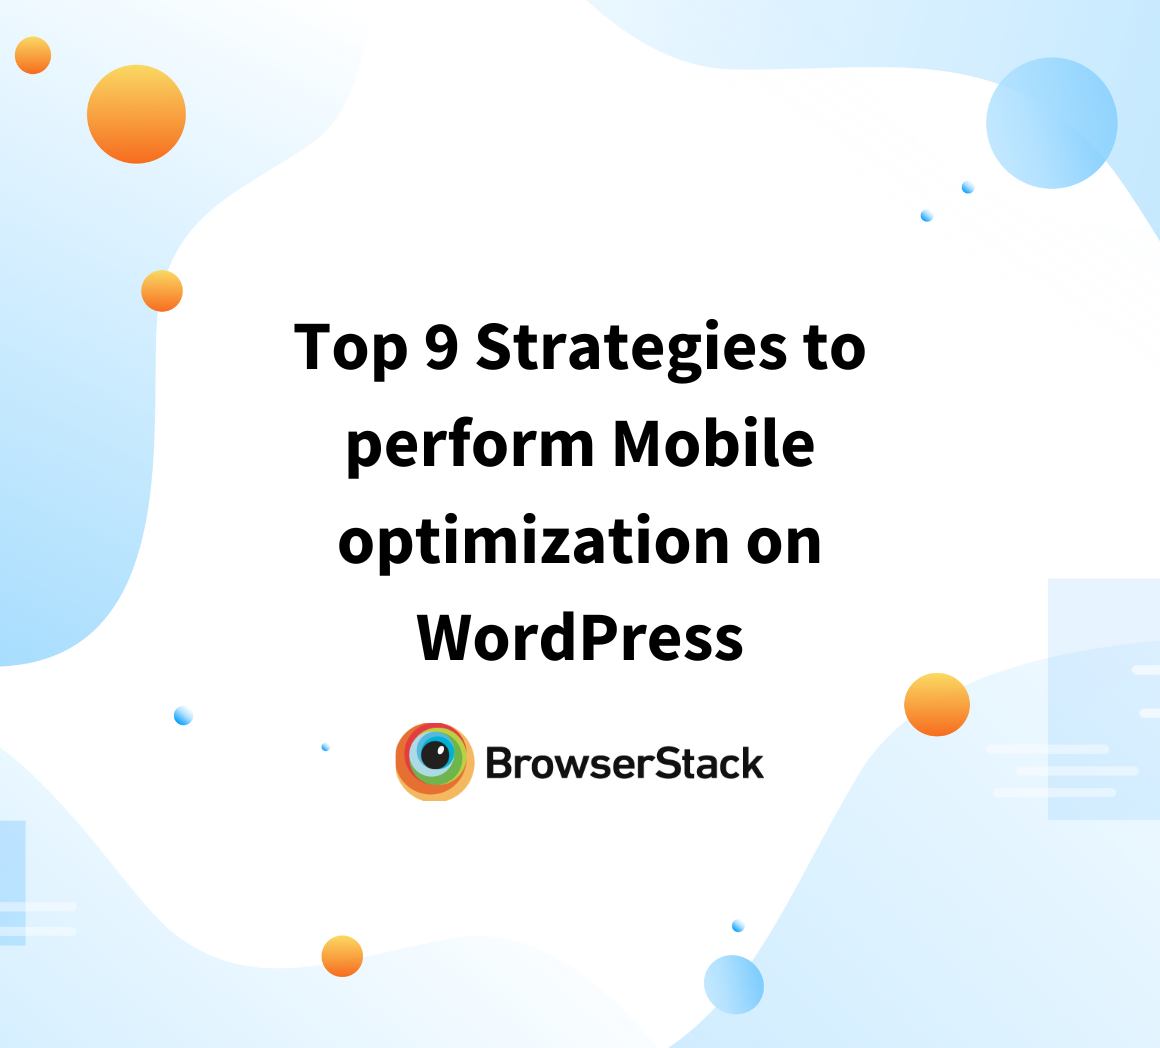 Top 9 Strategies to perform Mobile optimization on WordPress